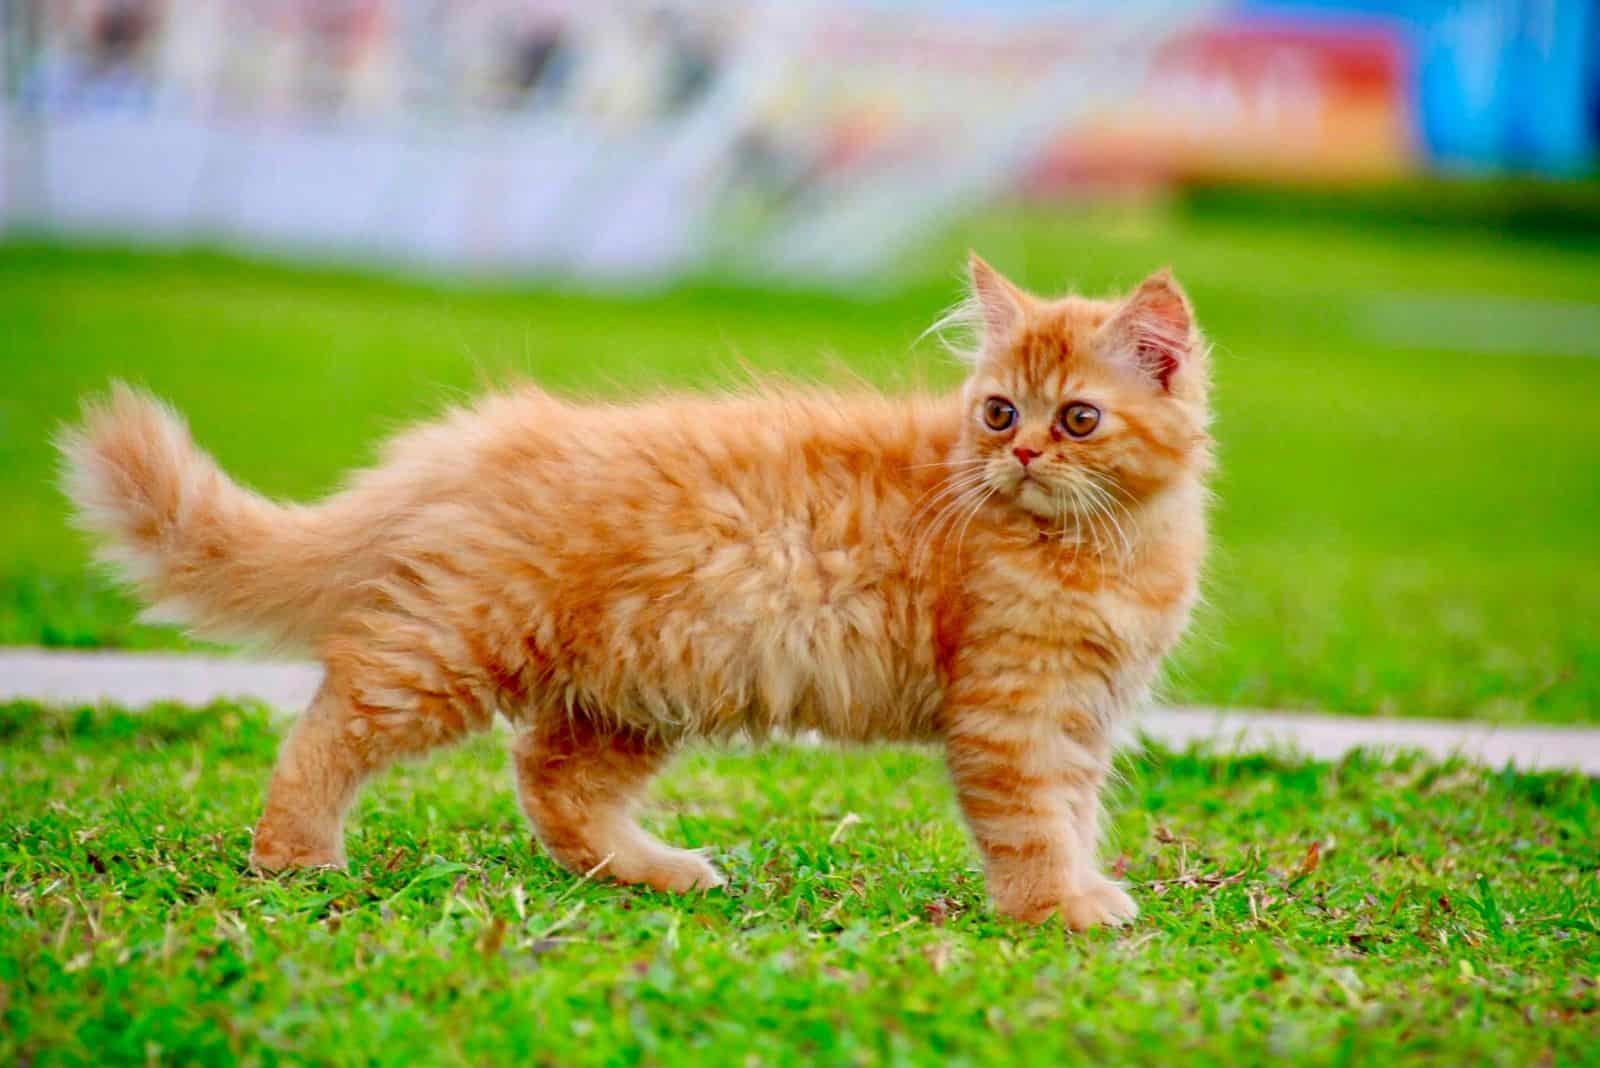 ginger cat on green grass